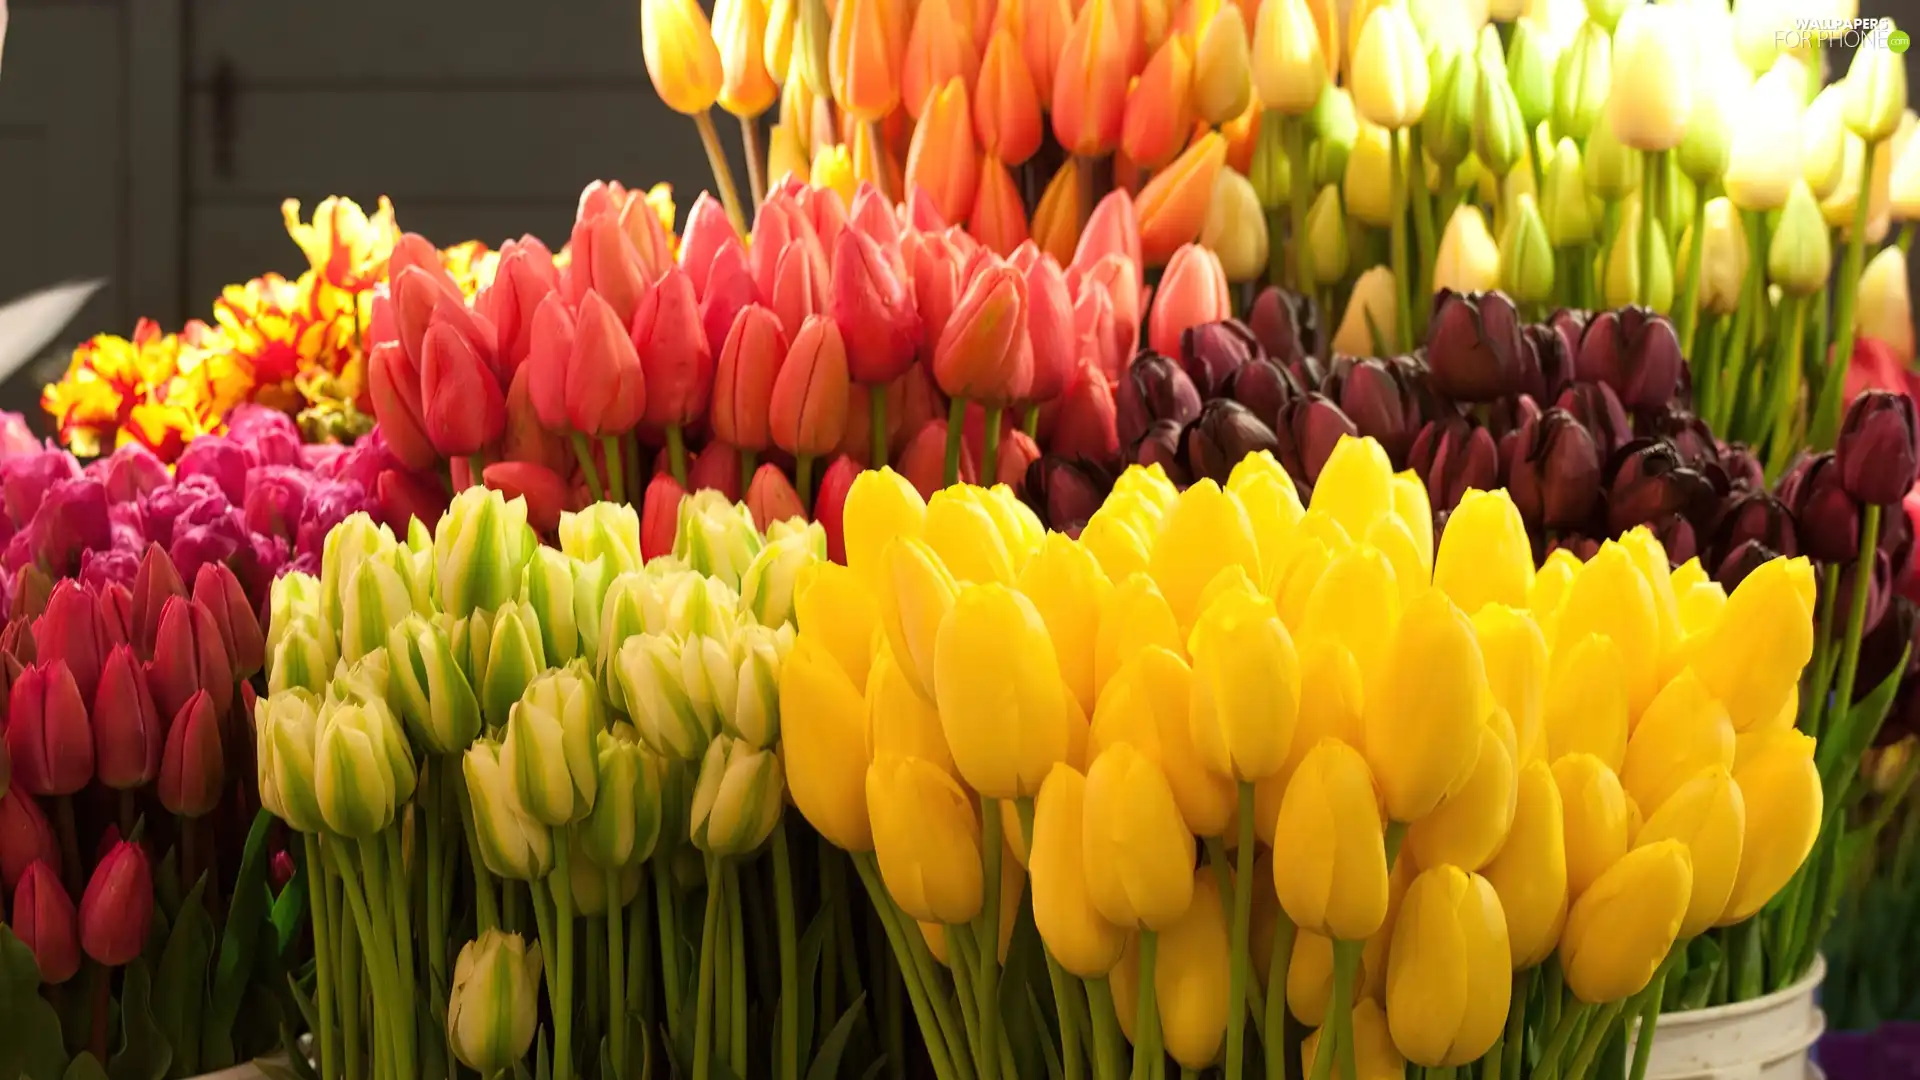 tulips, armful, Colorful